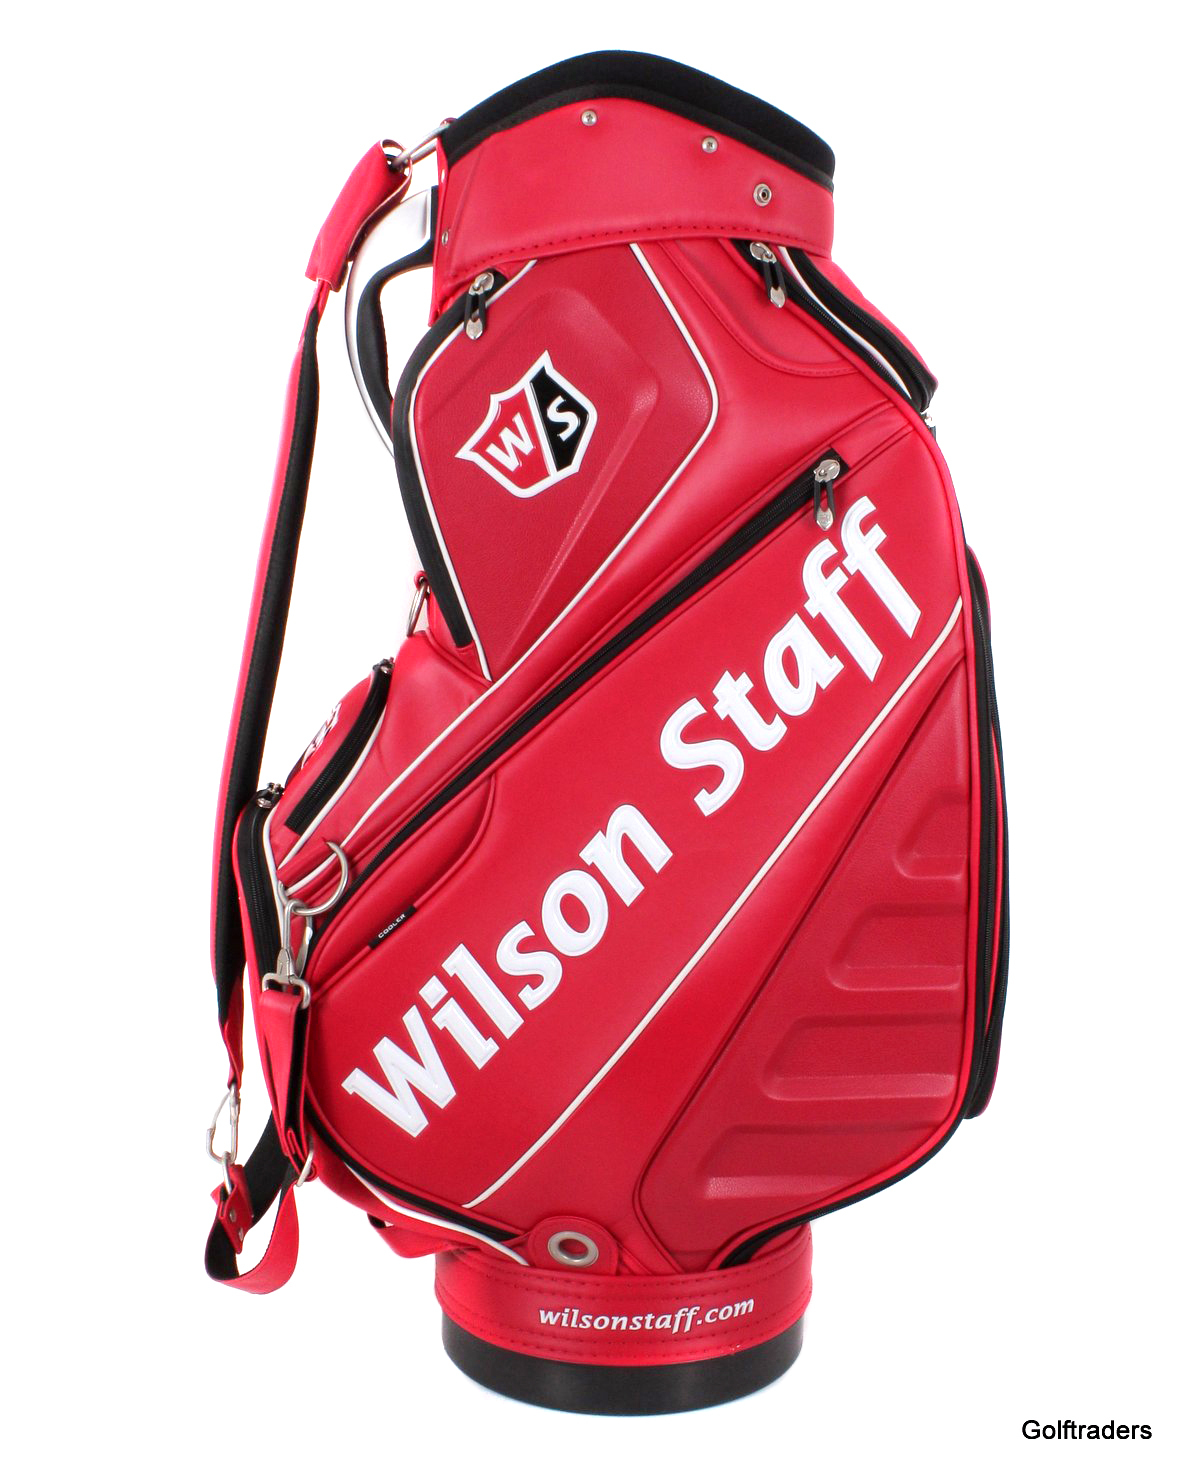 frihed Merchandising Tyr Wilson Staff Bag, Buy Now, Flash Sales, 50% OFF, www.busformentera.com